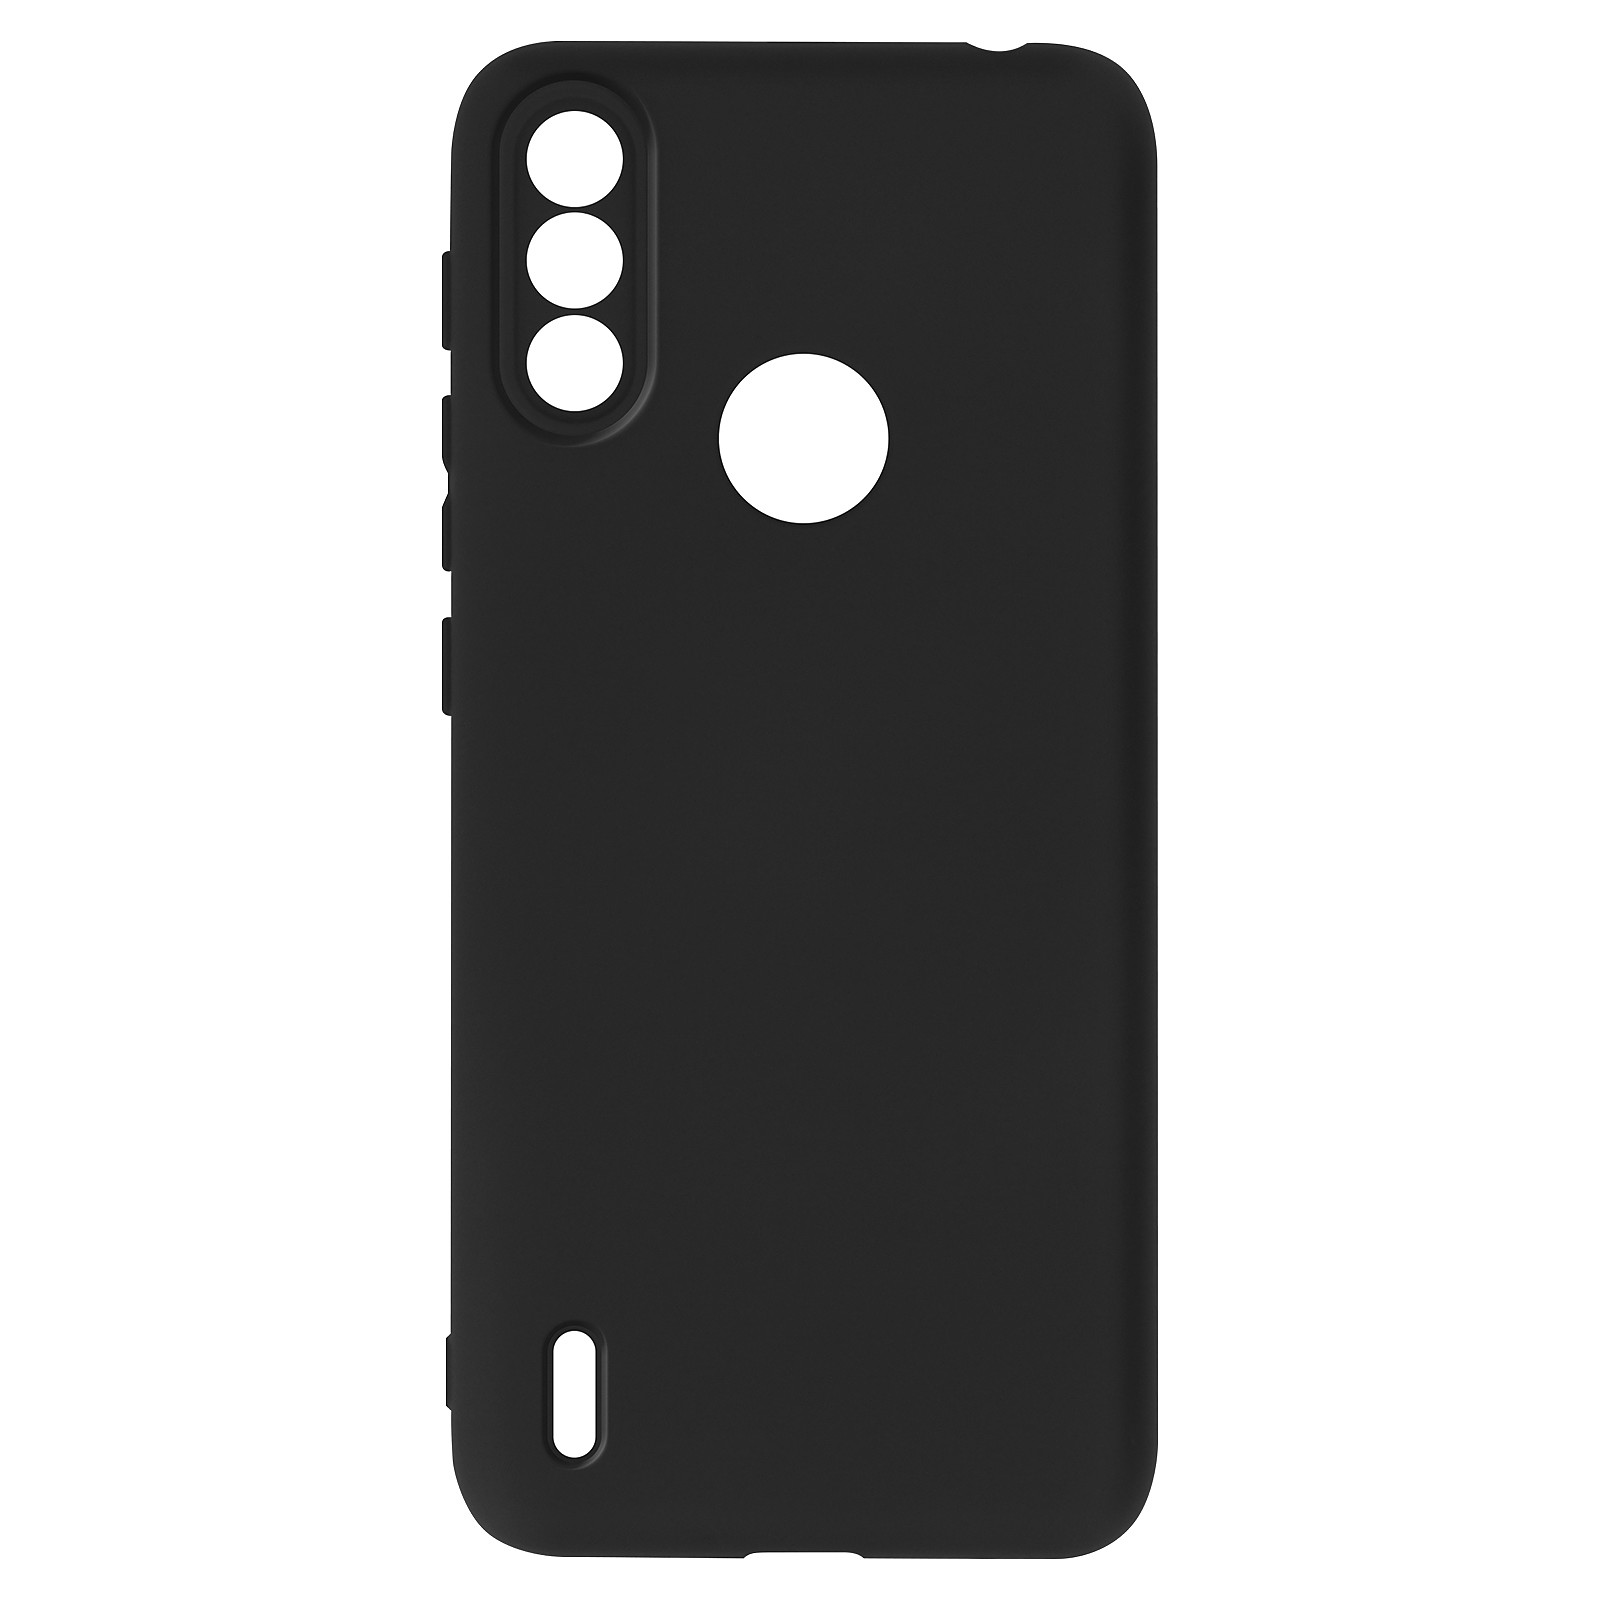 Avizar Coque pour Motorola Moto E7i Silicone Semi-rigide Finition Soft Touch Fine Noir - Coque telephone Avizar